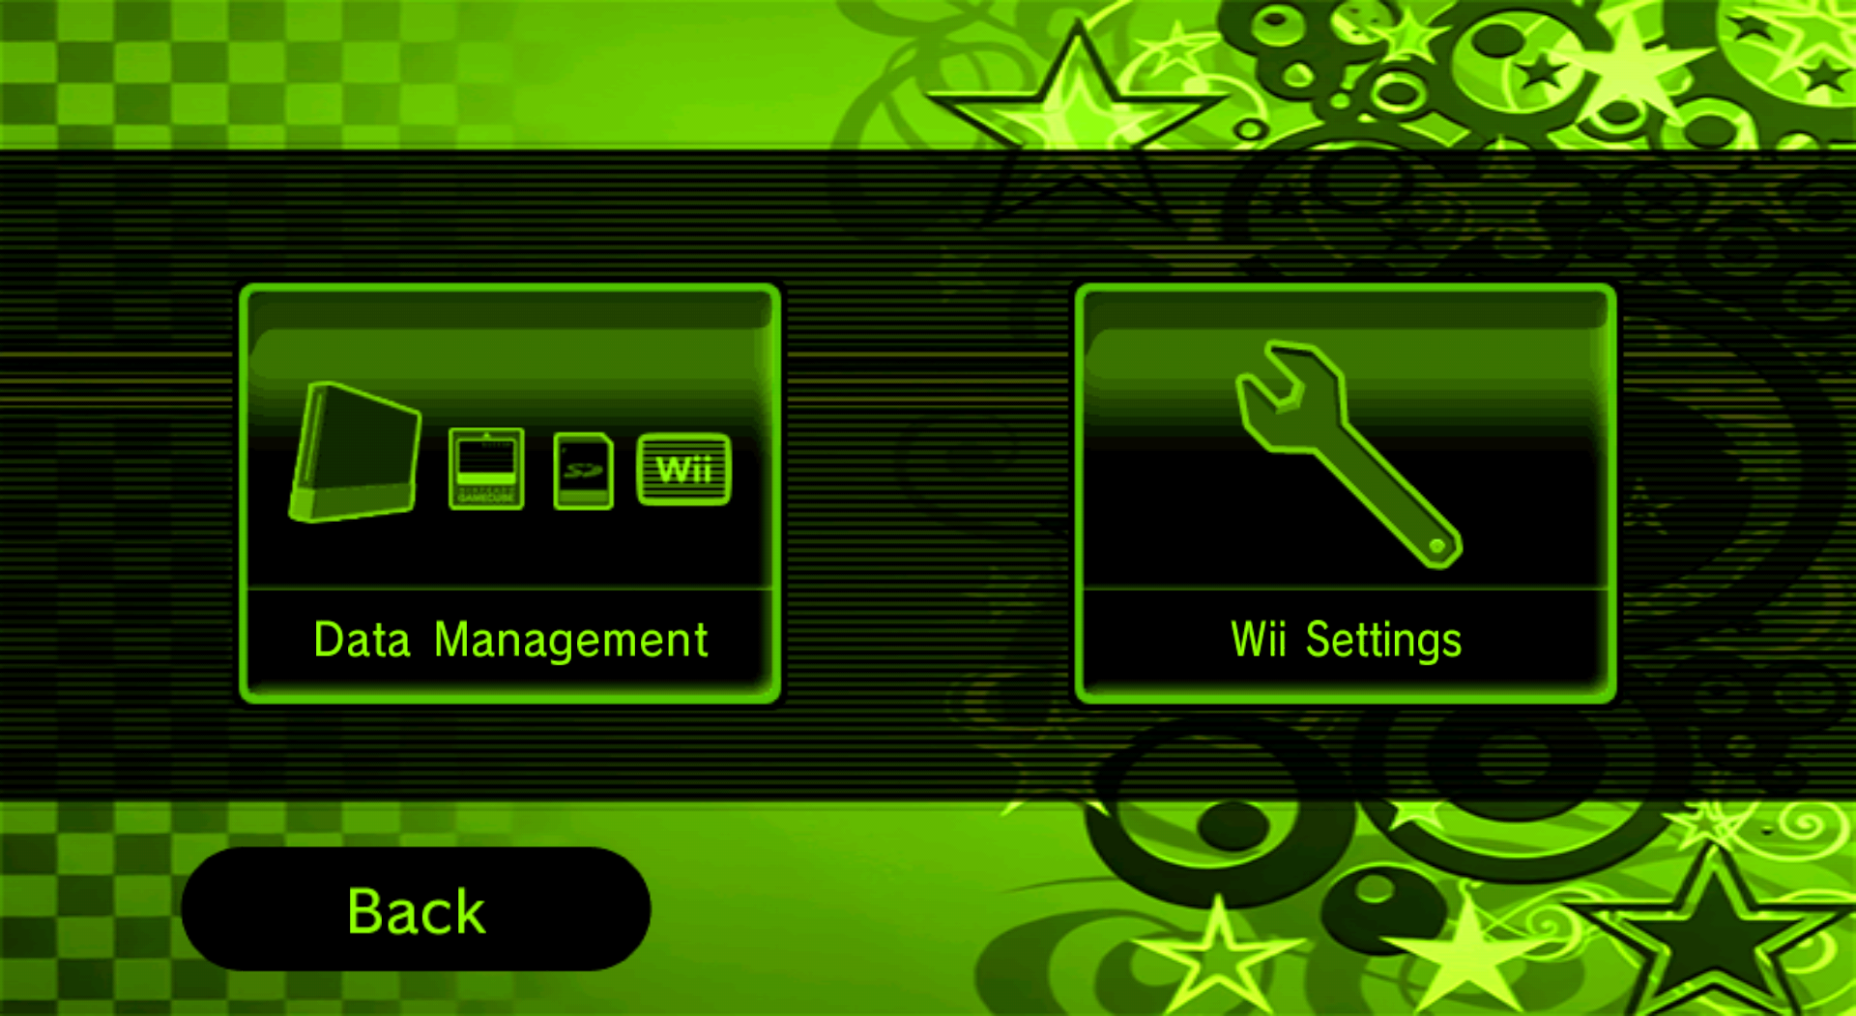 Wii Options menu - Green